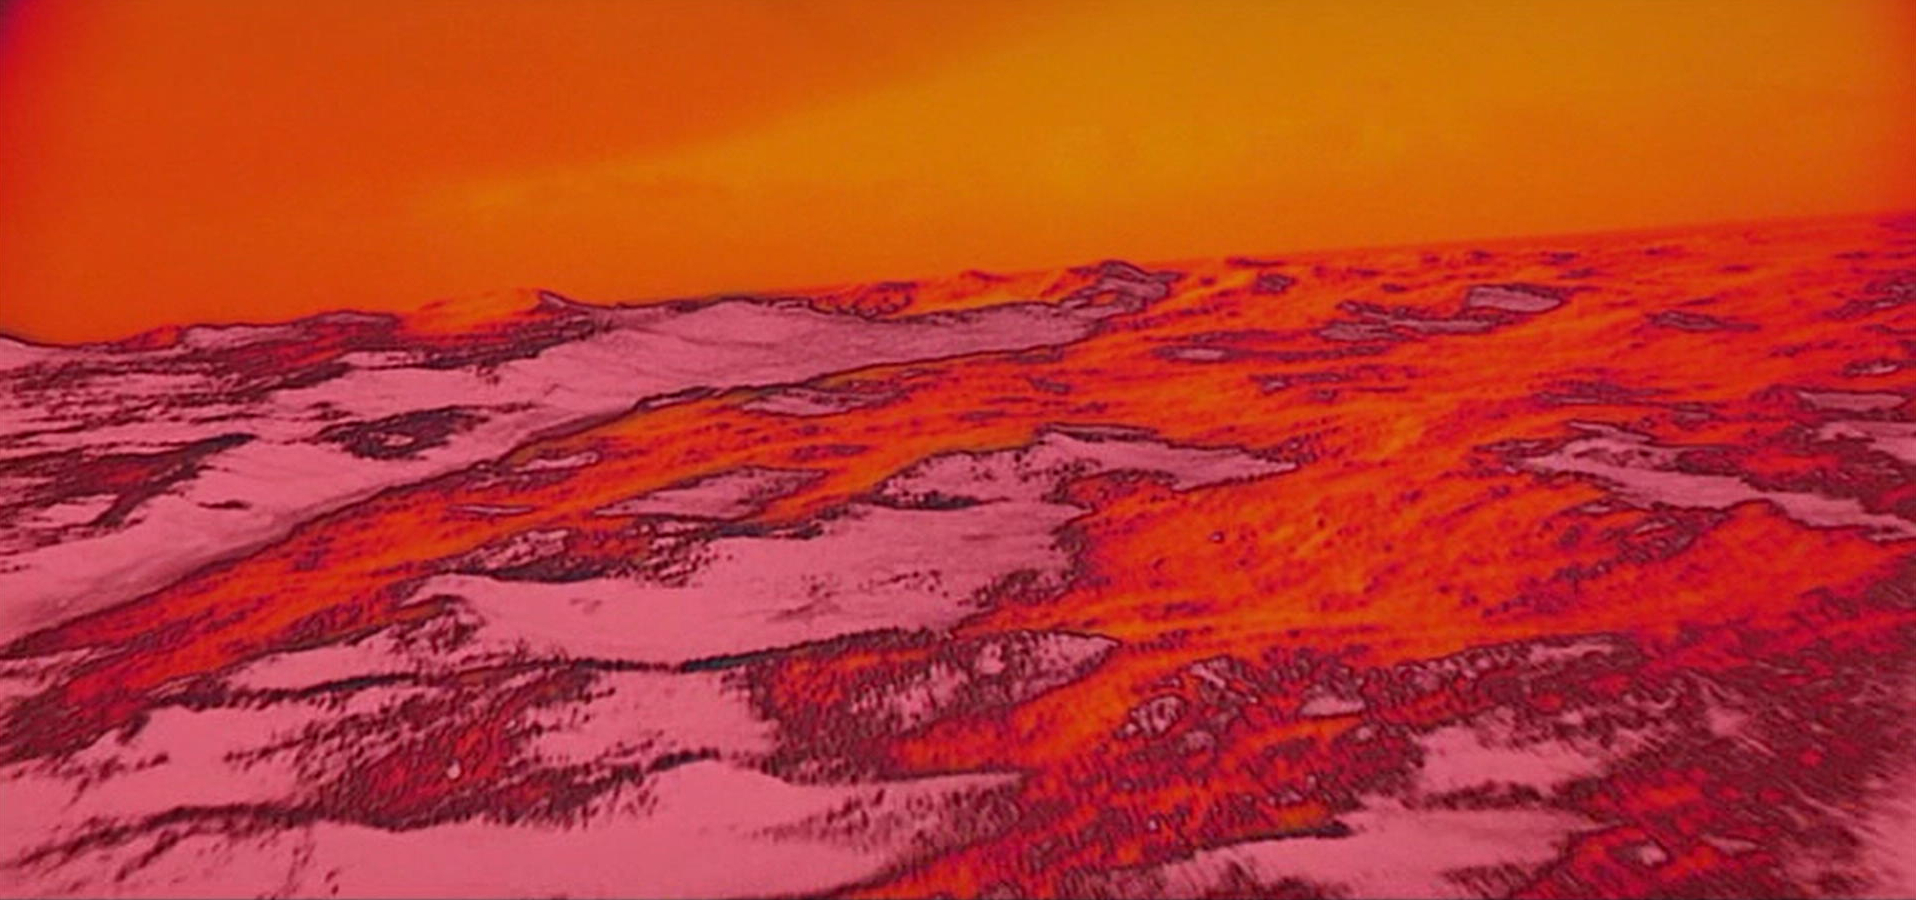 2001: A Space Odyssey - Stanley Kubrick - landscape - orange - pink - red